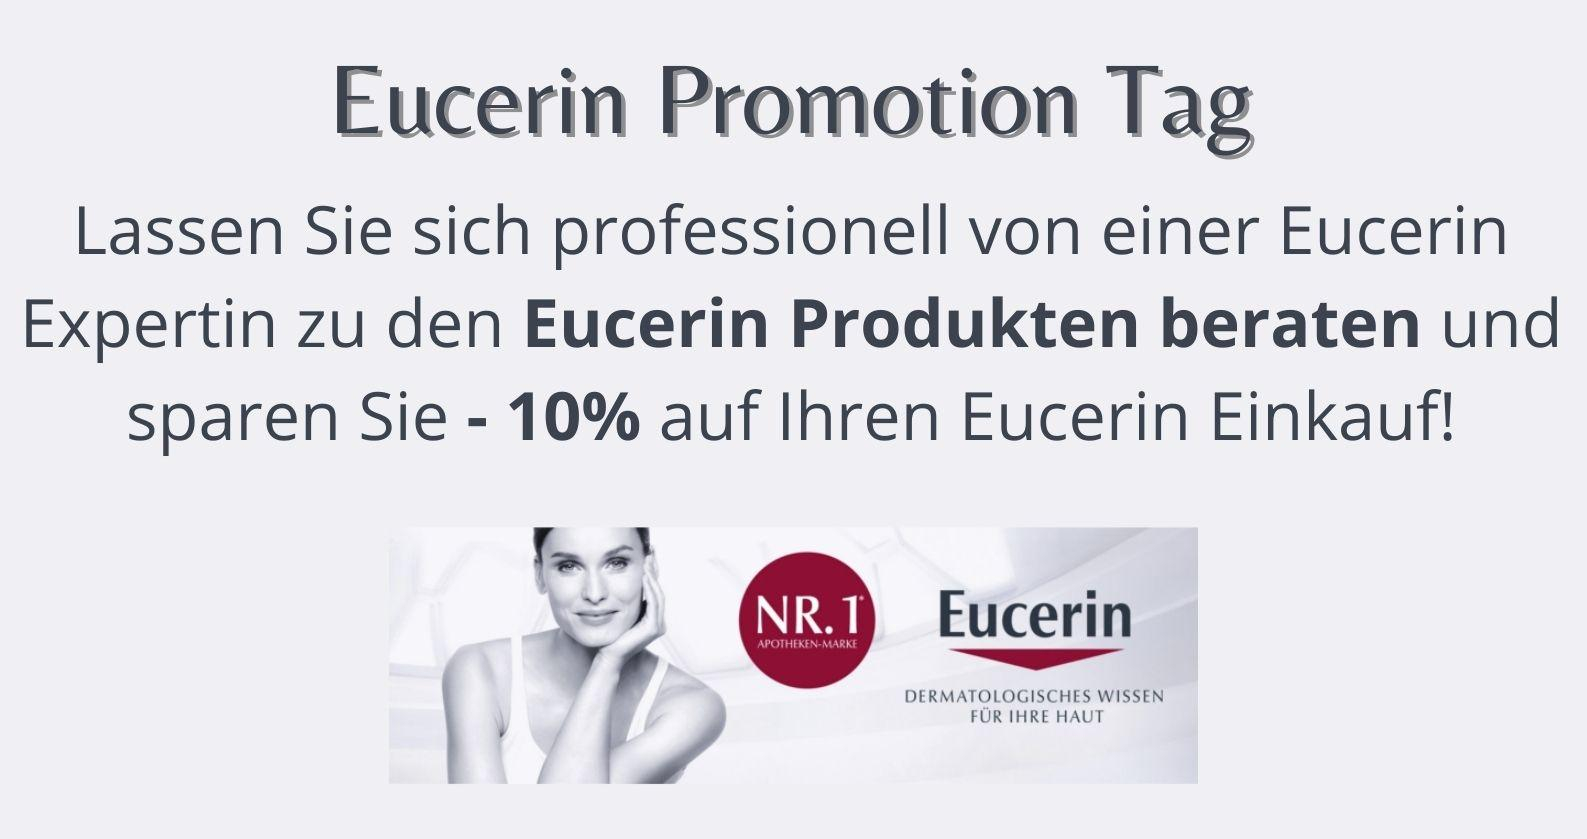 Eucerin Promotion Tag